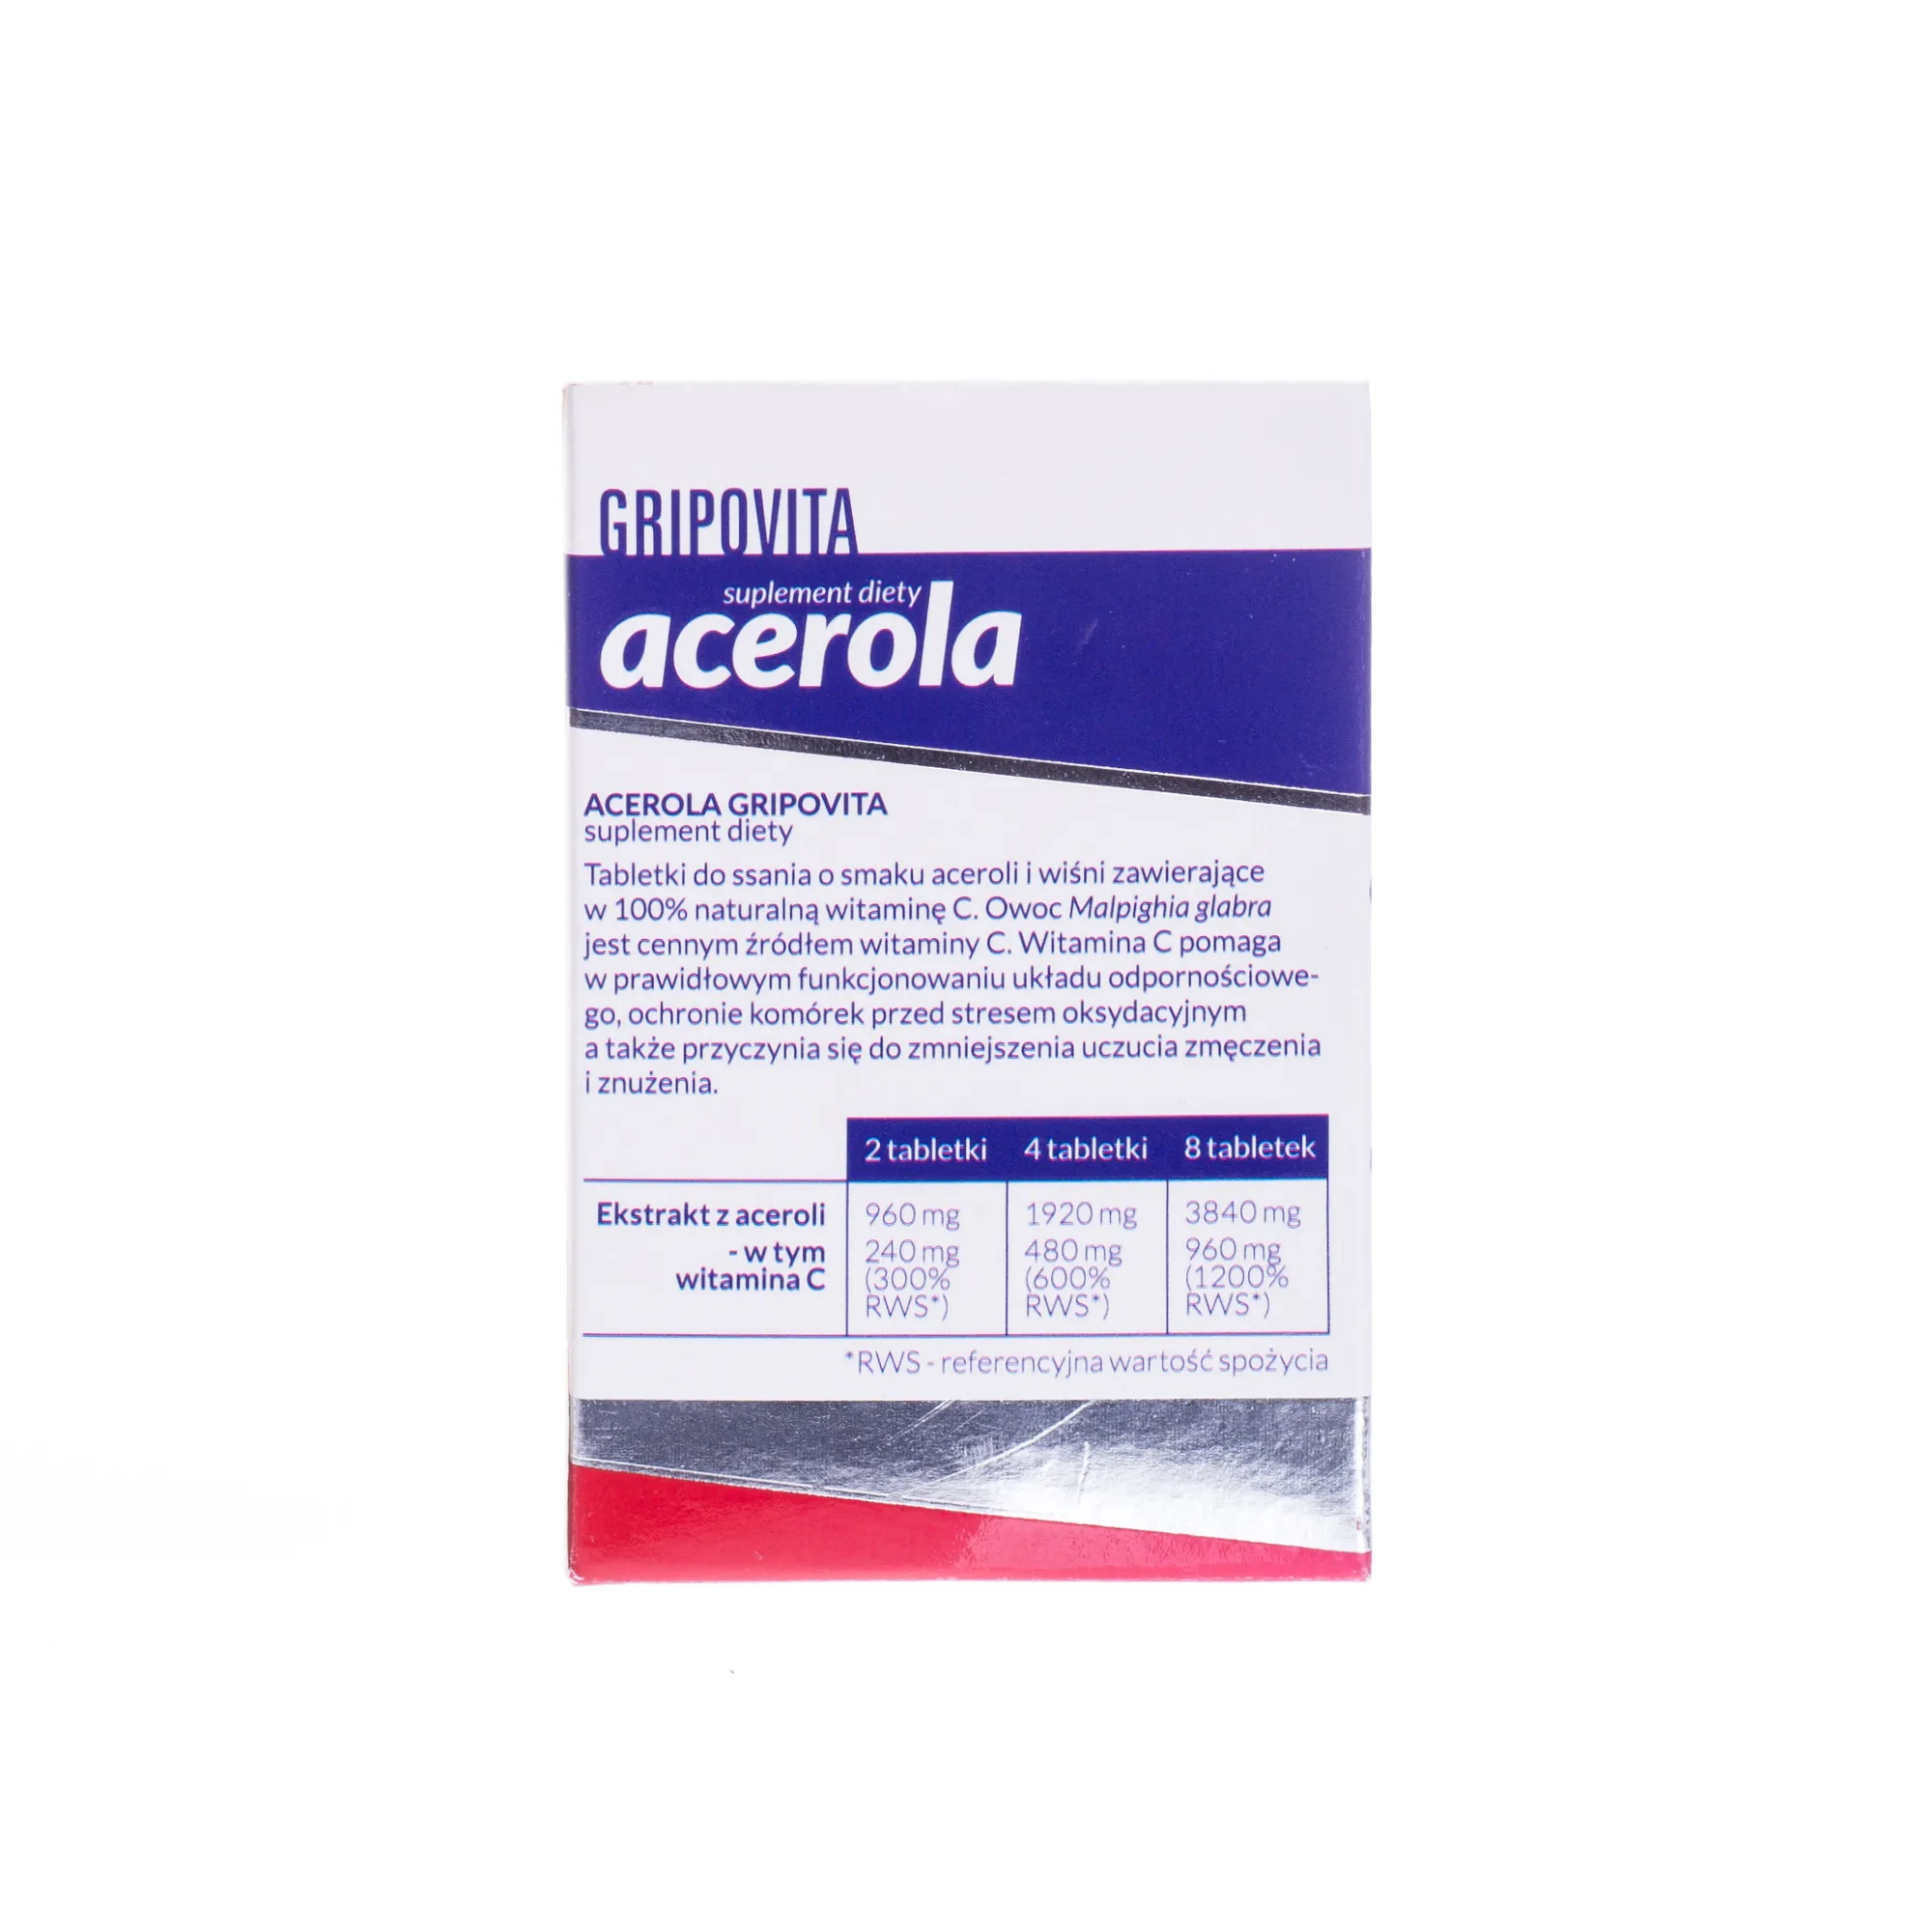 Acerola Gripovita, suplement diety, 60 tabletek do ssania 